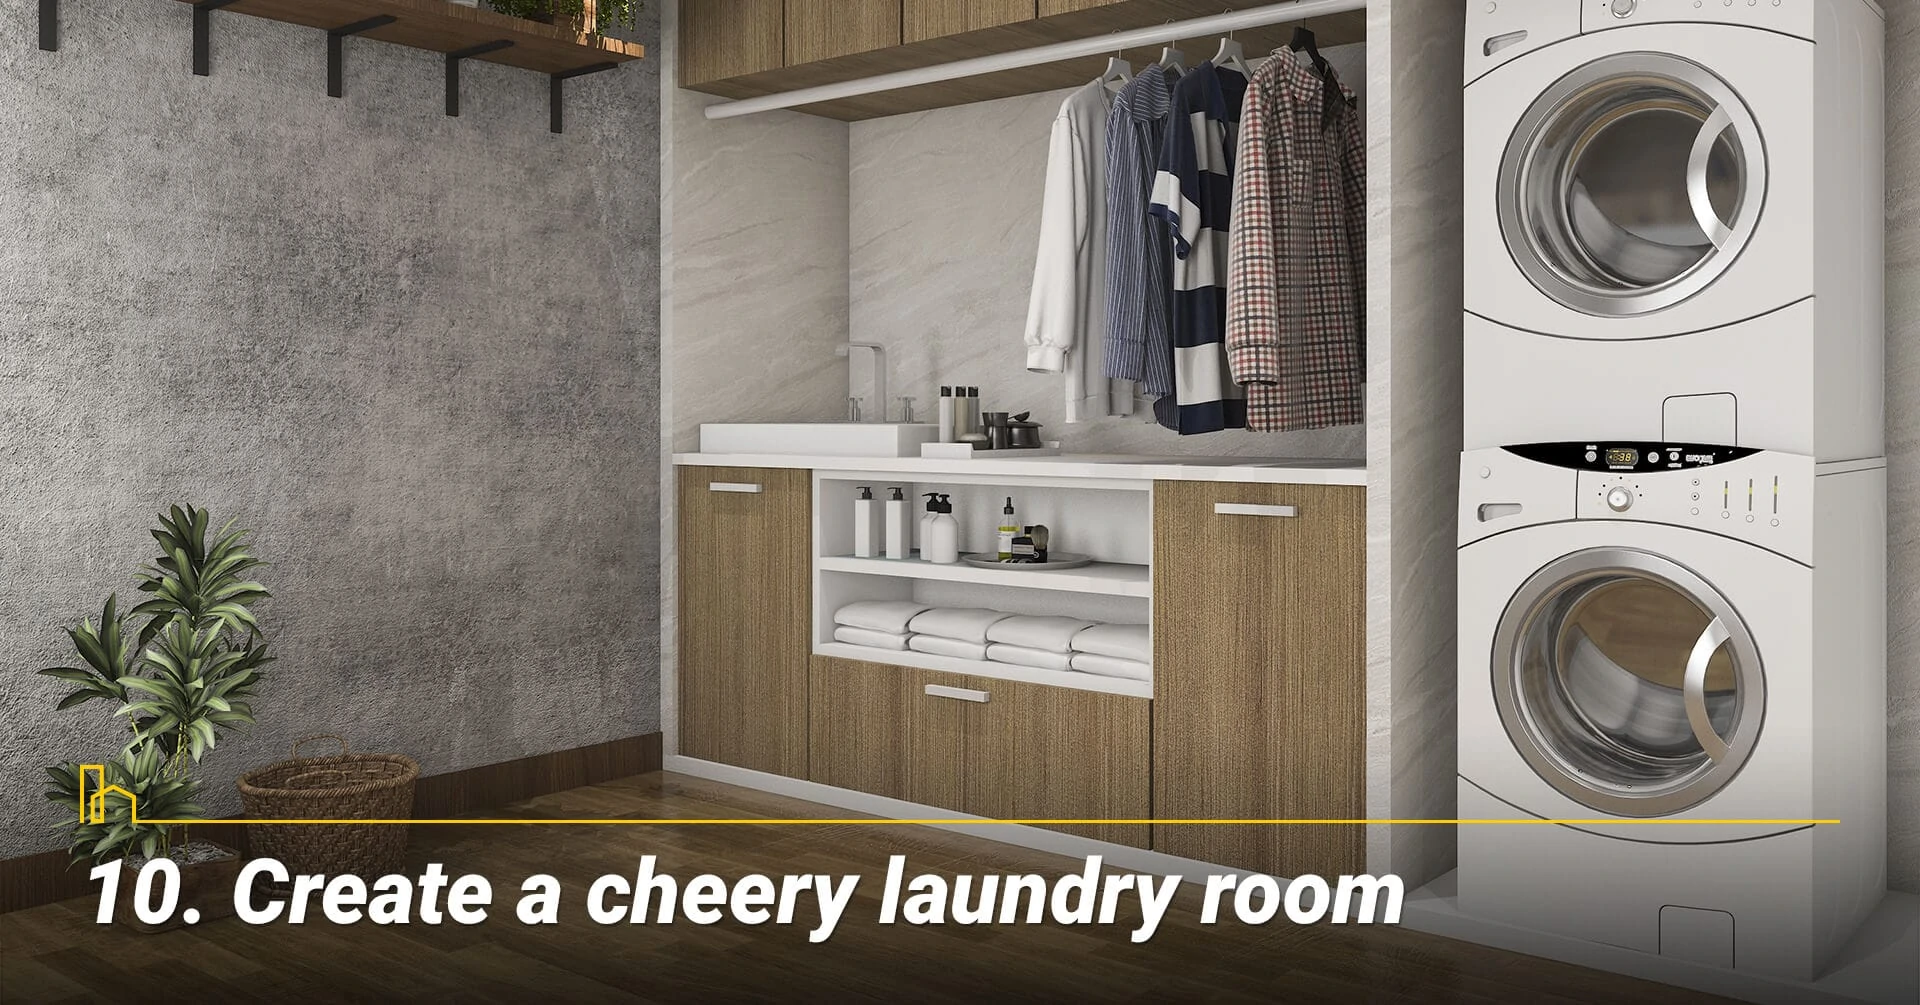 Create a cheery laundry room, organize the laundry room